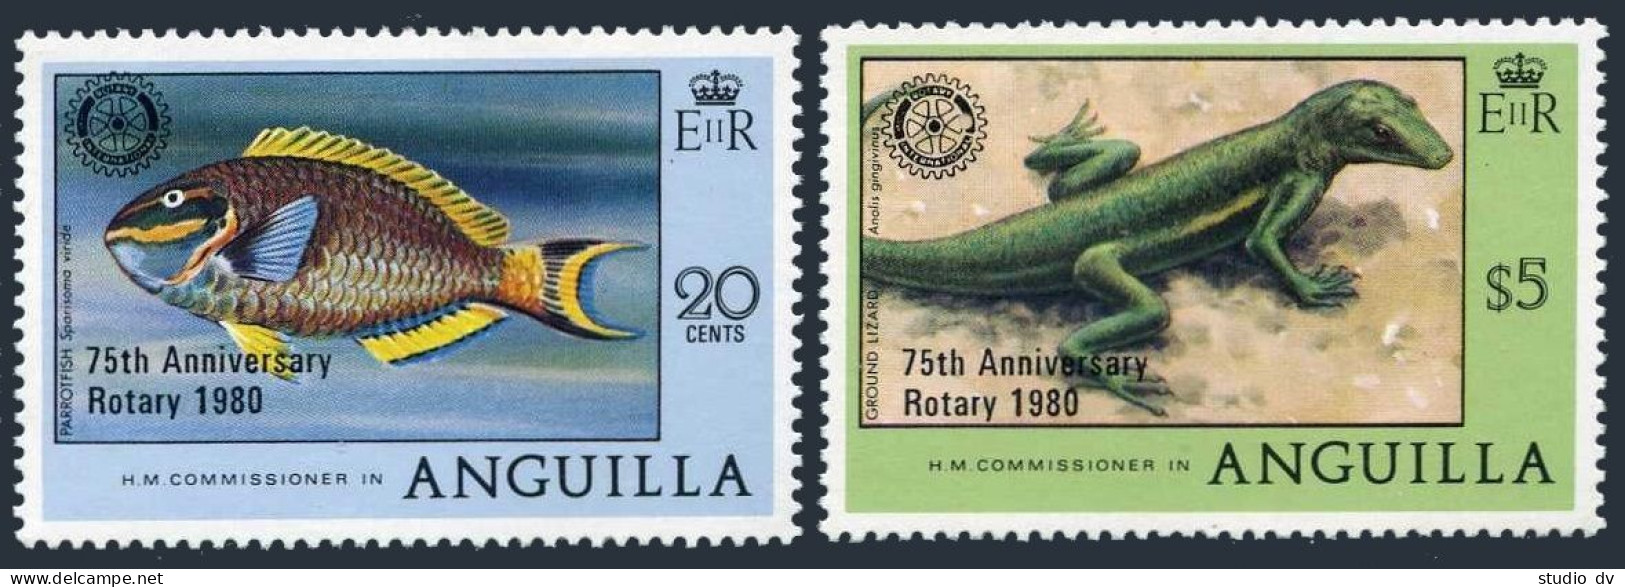 Anguilla 389-390, MNH. Michel 387-388. Rotary Intl,75th Ann. Parrot-fish,Lizard. - Anguilla (1968-...)